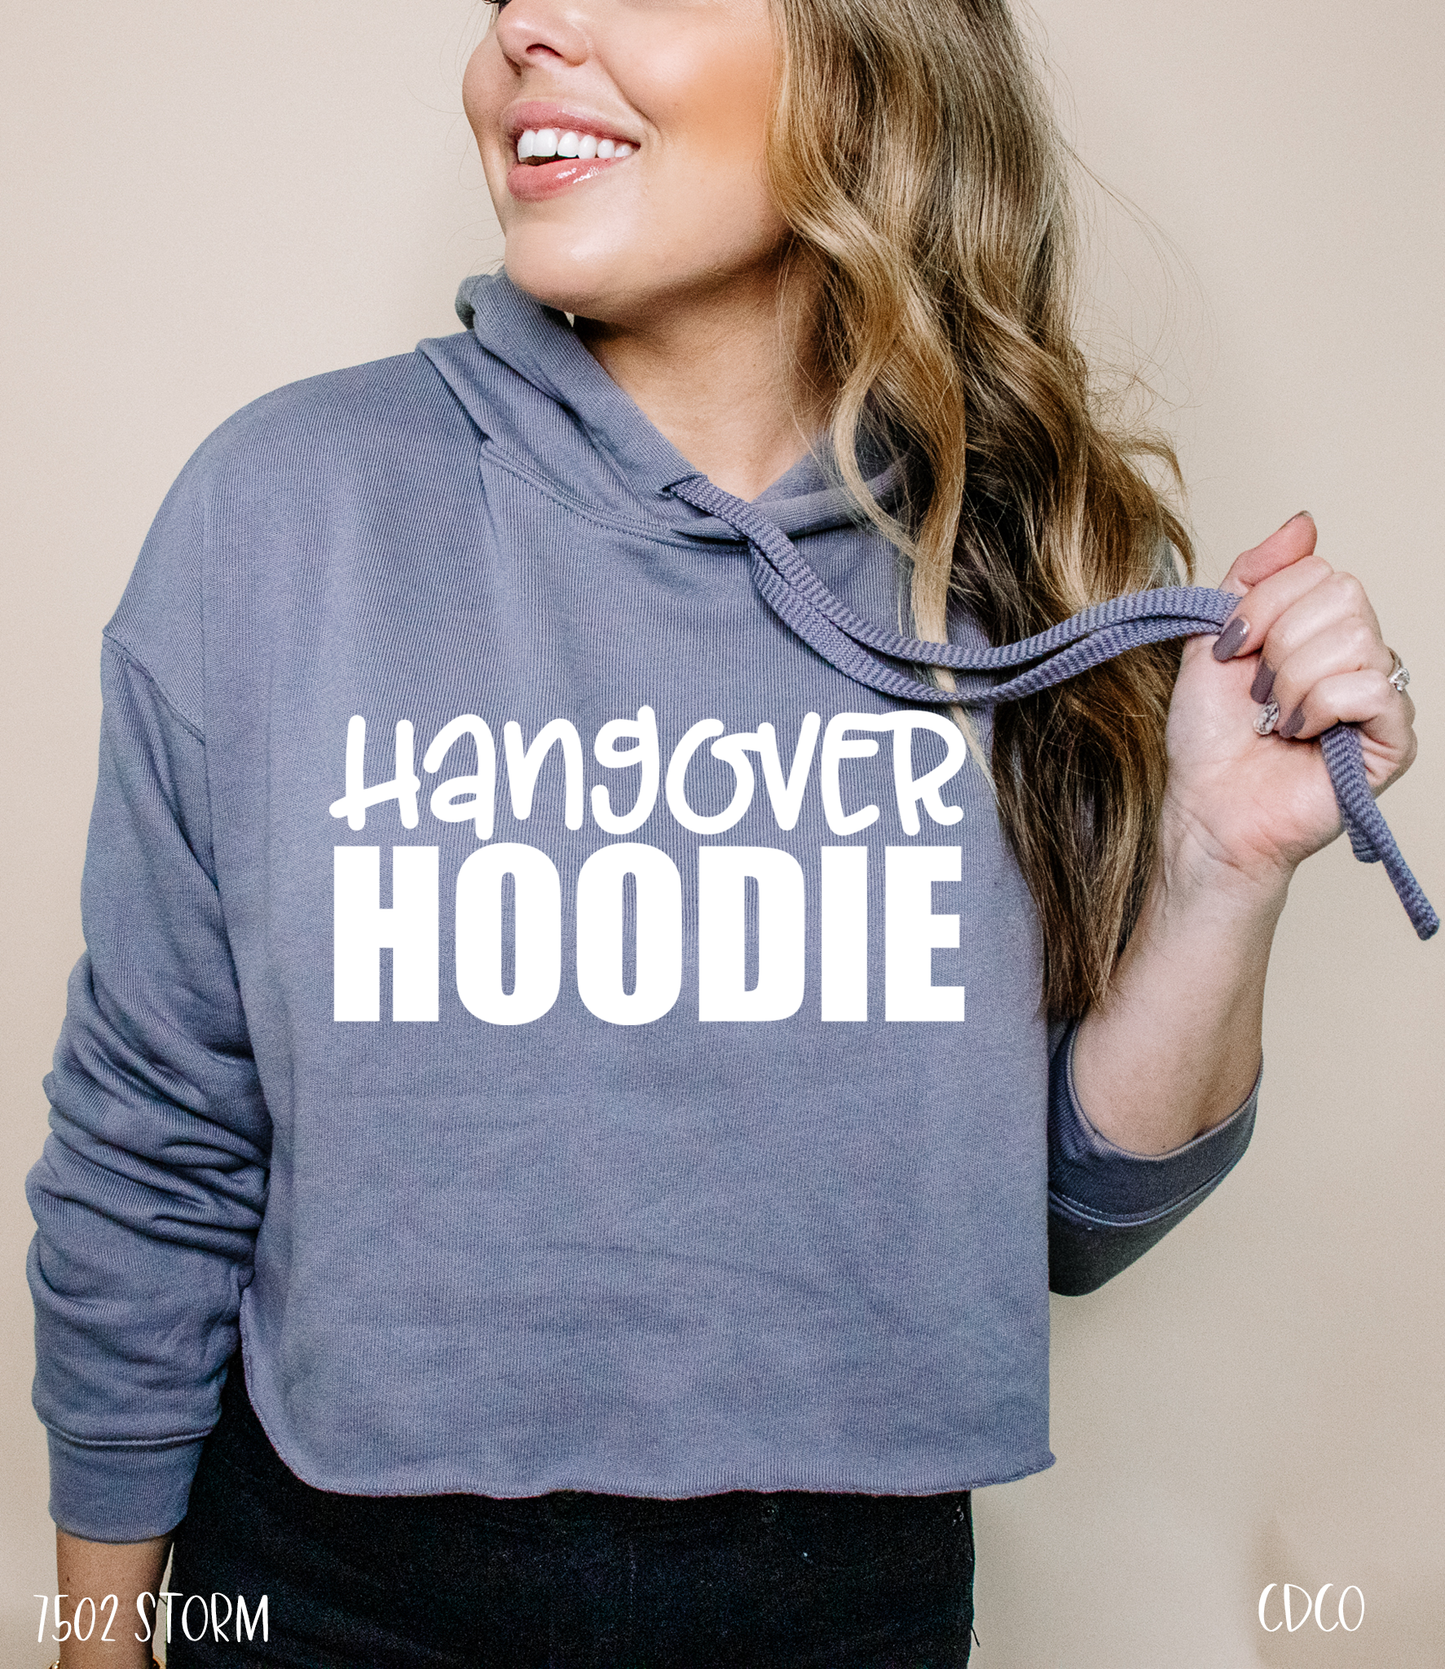 Hangover Hoodie (325°)